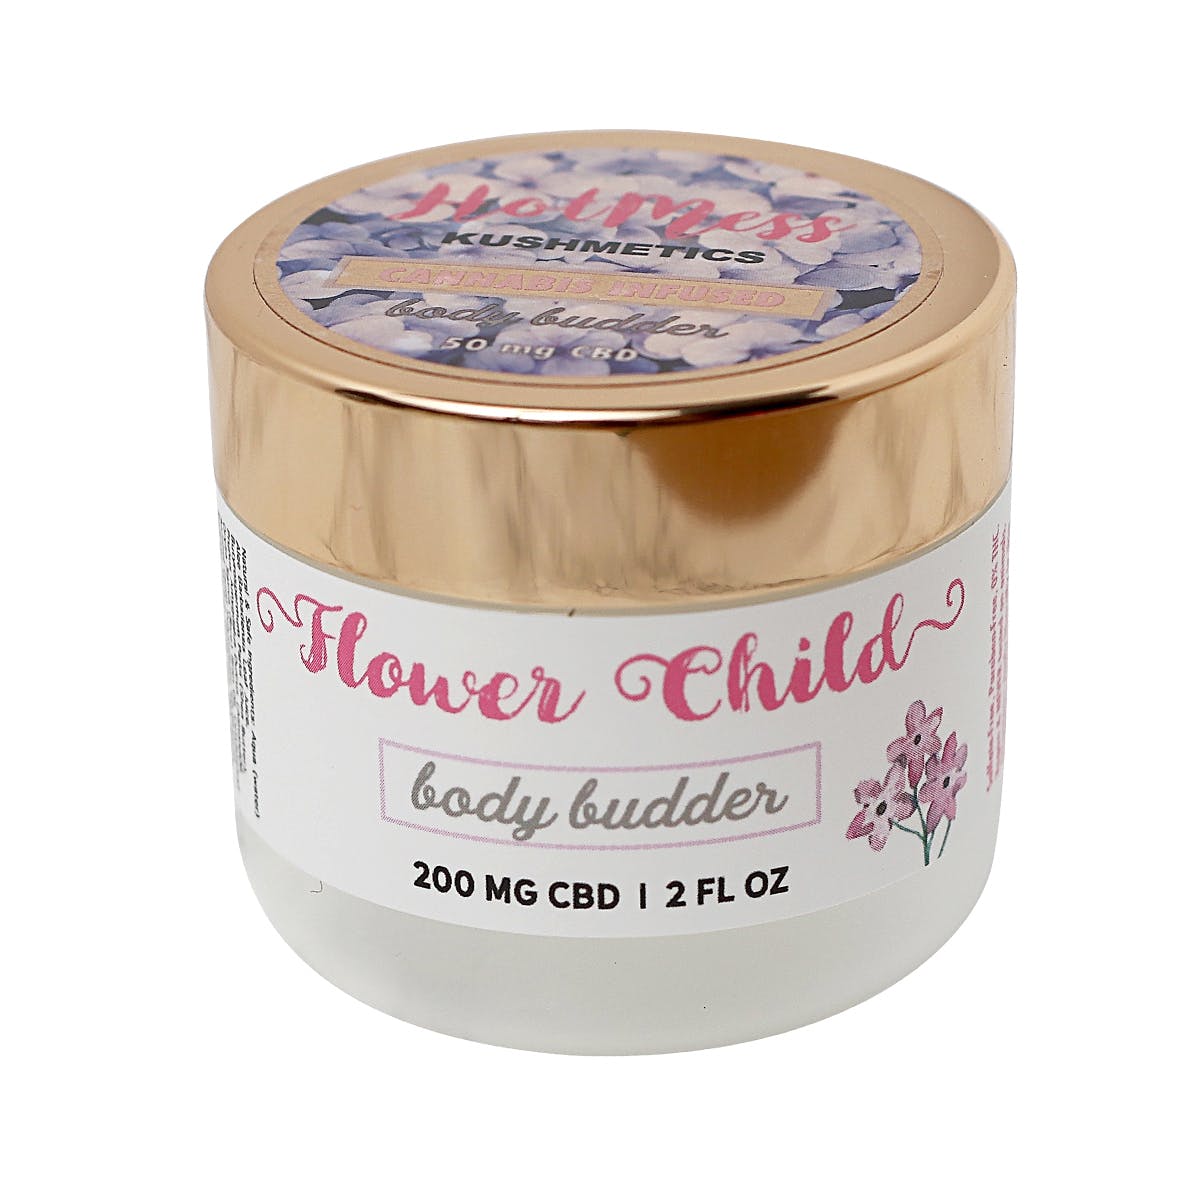 Flower Child Body Budder, 2 oz / 200 mg CBD